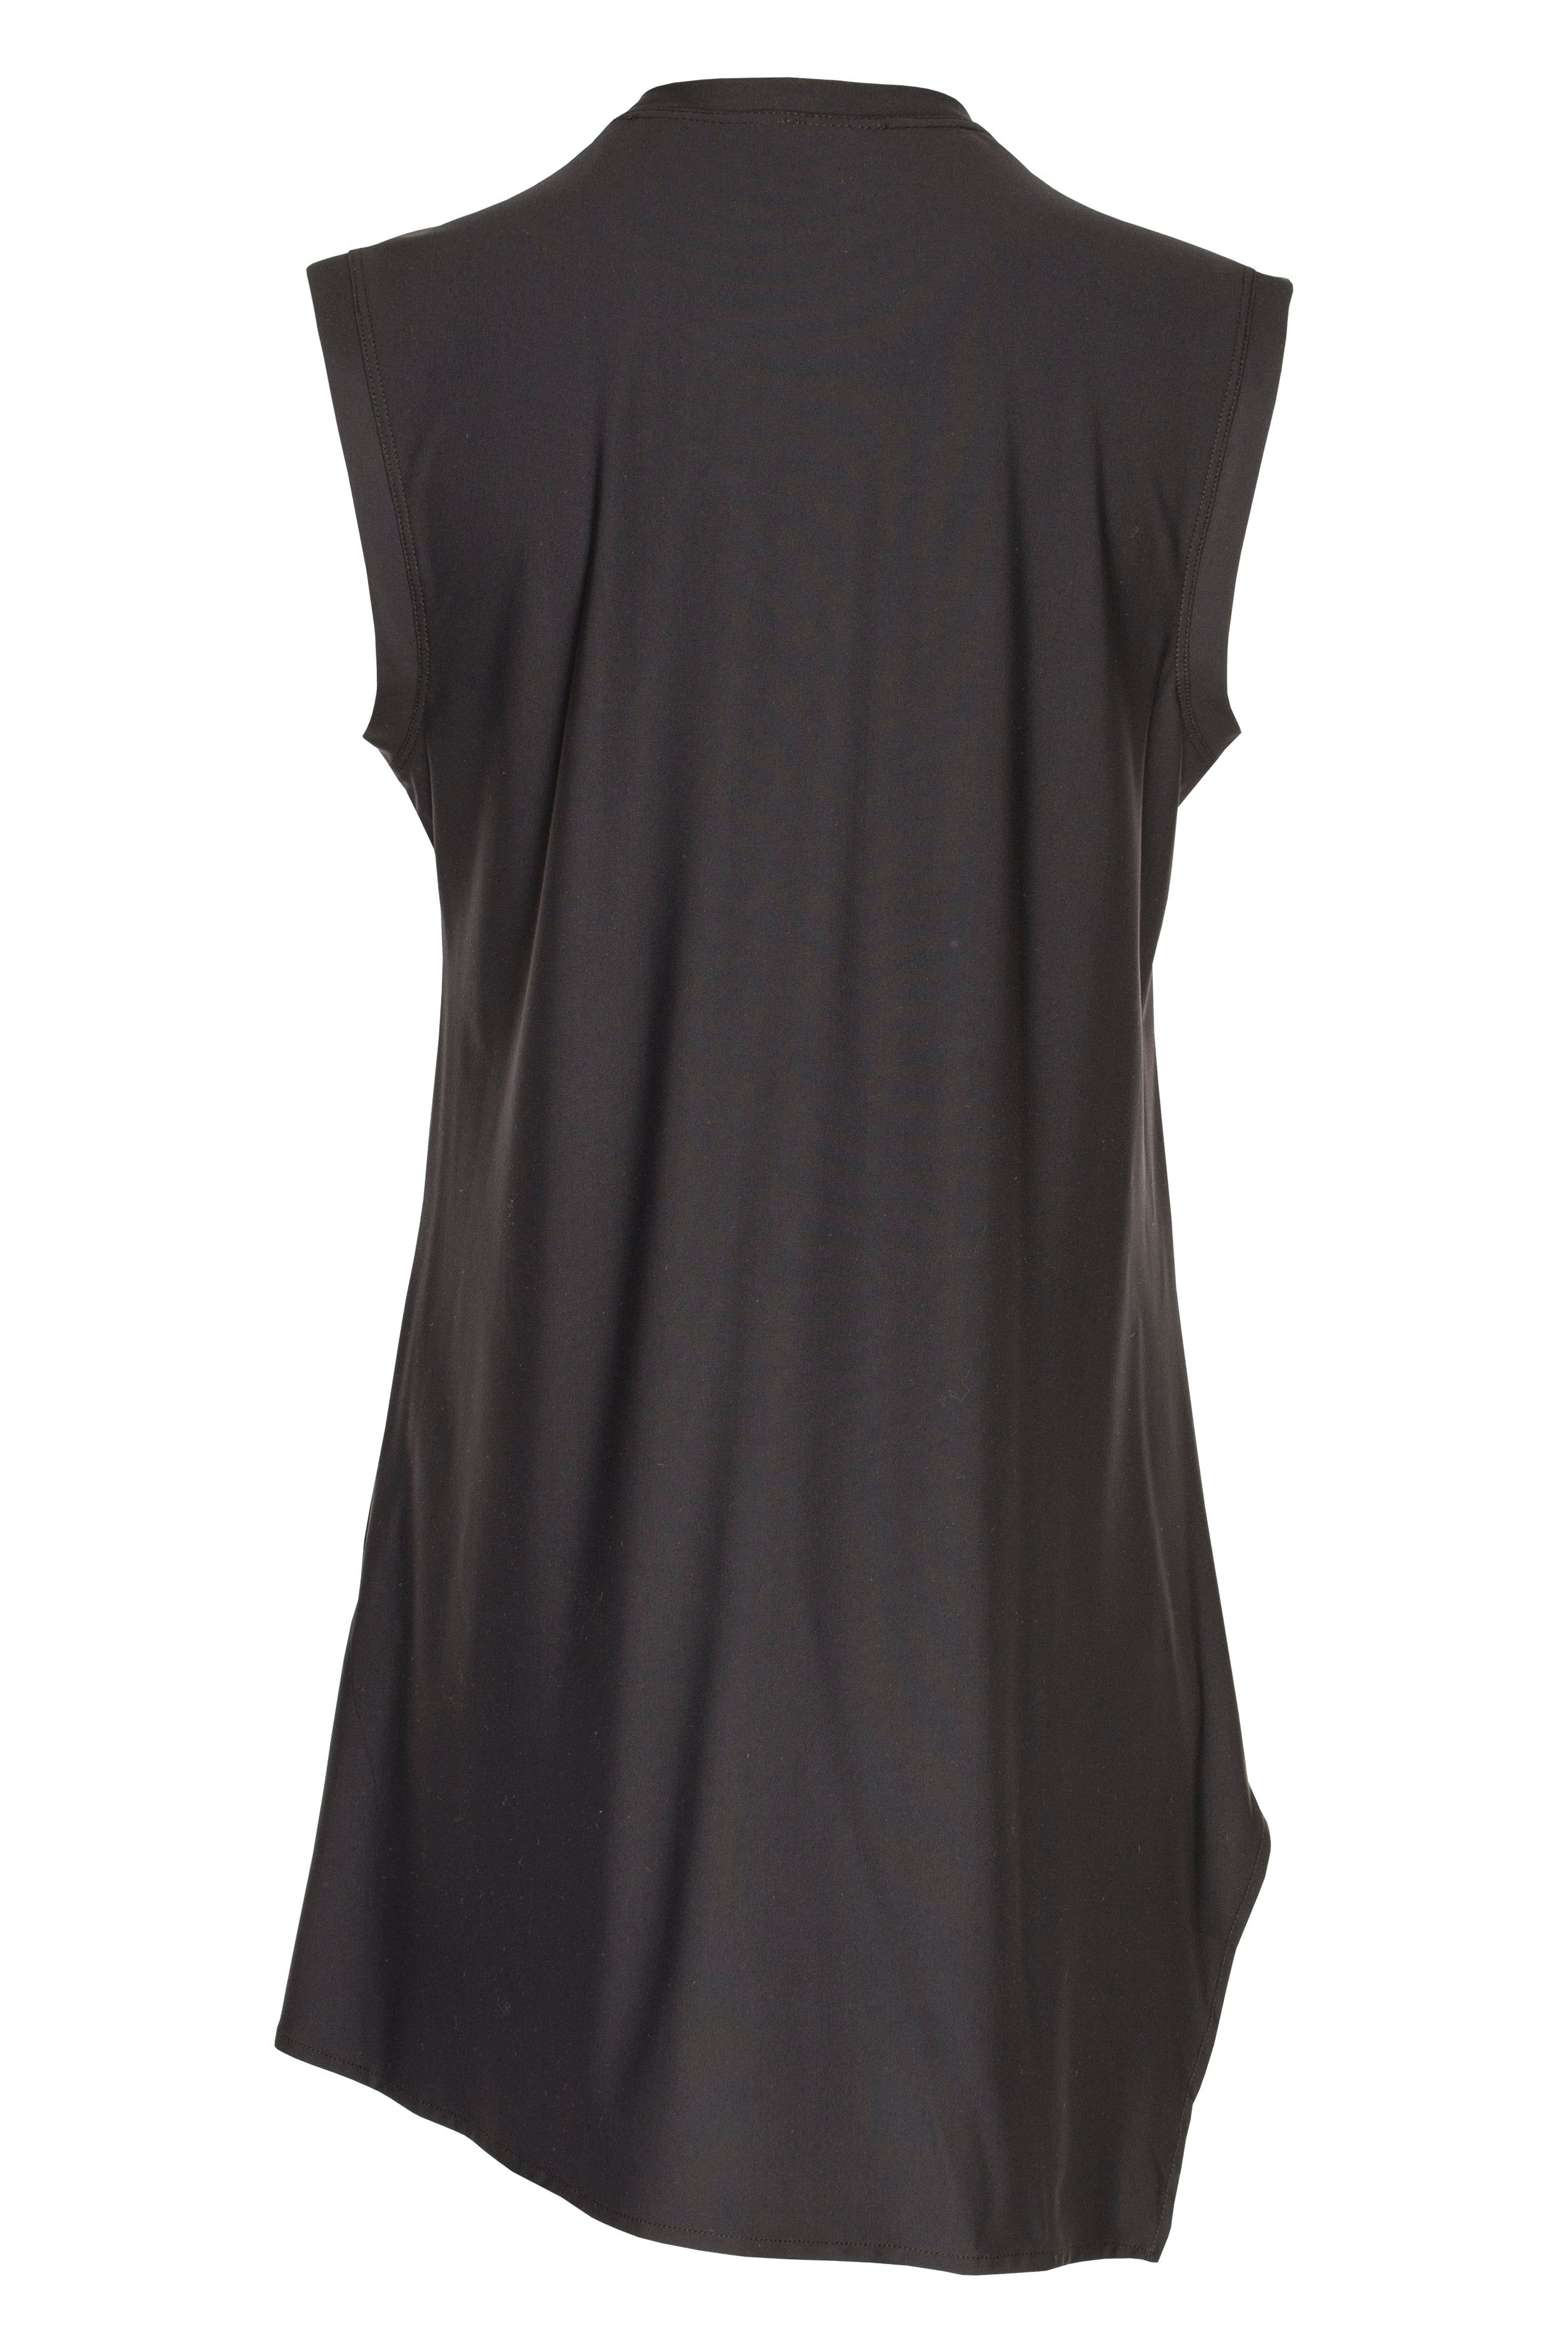 Black Jersey Folded Front Singlet 7232 – DIGBYS Boutique